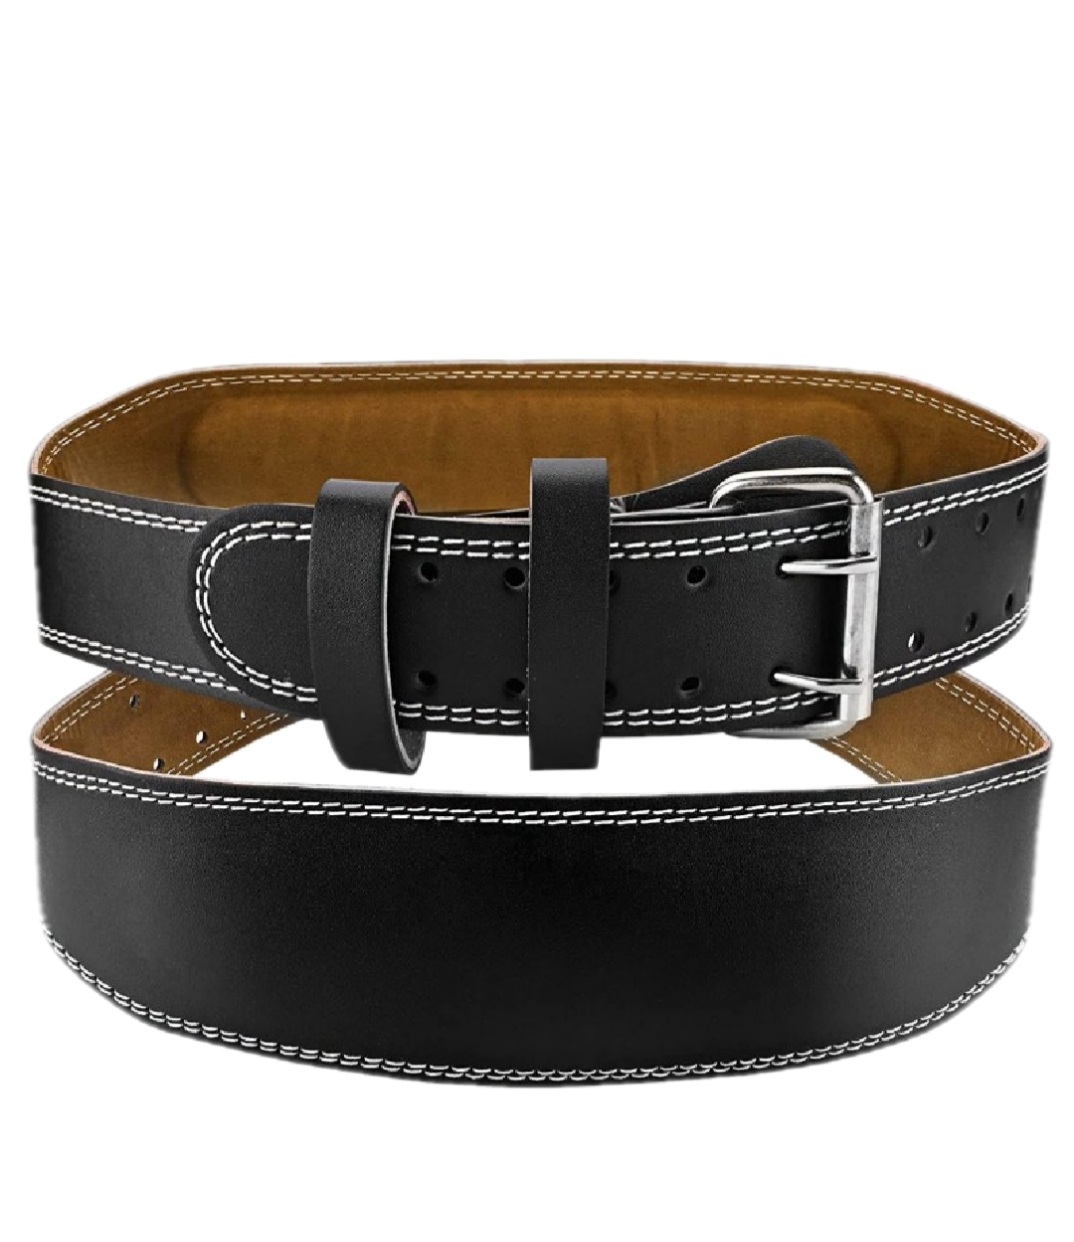 Cinturón Lumbar De Cuero Para Cintura De 75 A 100cm Ded - negro - 